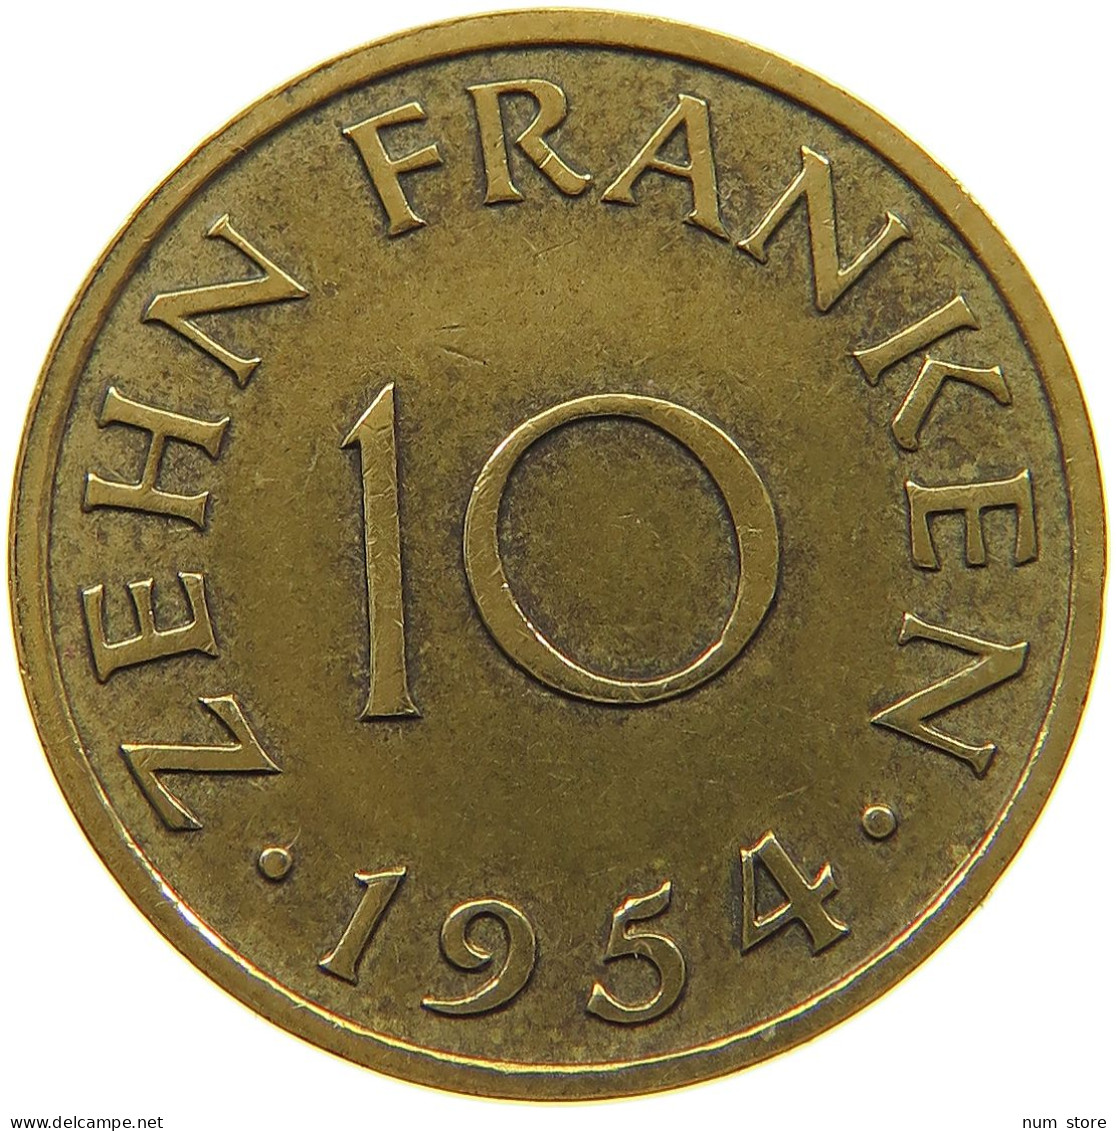 GERMANY WEST 10 FRANKEN 1954 SAARLAND #a047 0485 - 10 Franken